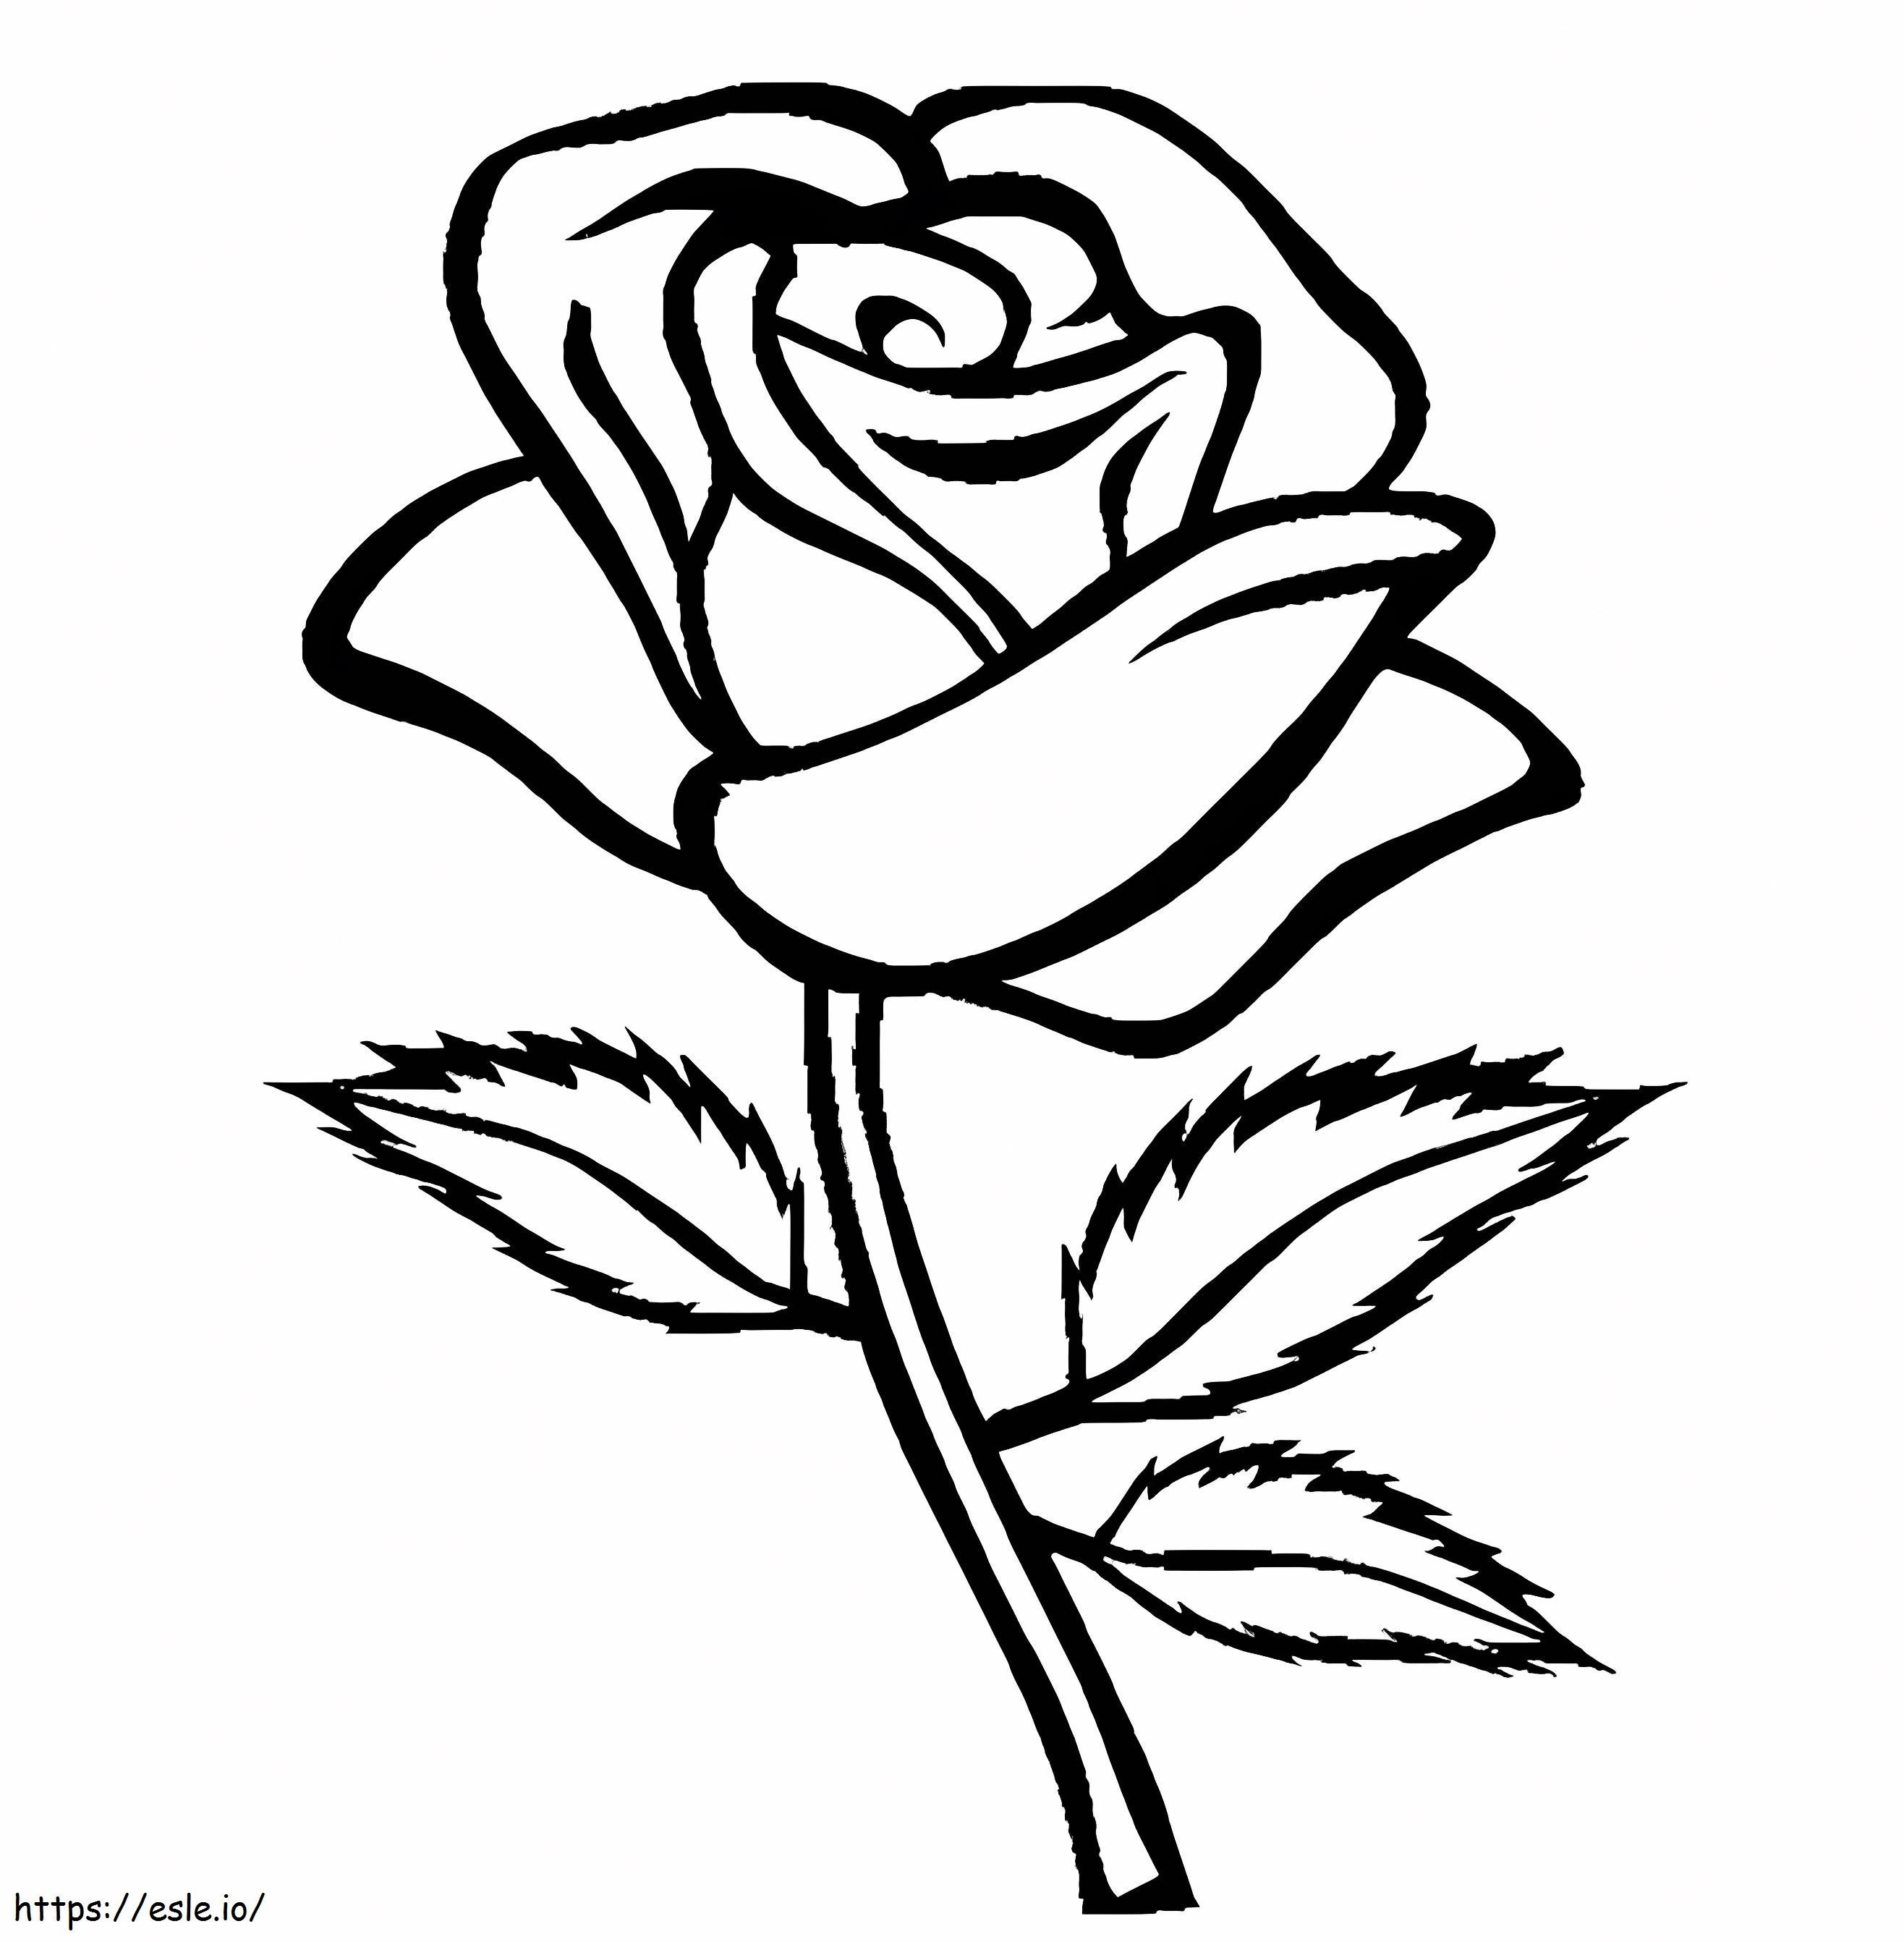 Coloriage Superbe Rose à imprimer dessin